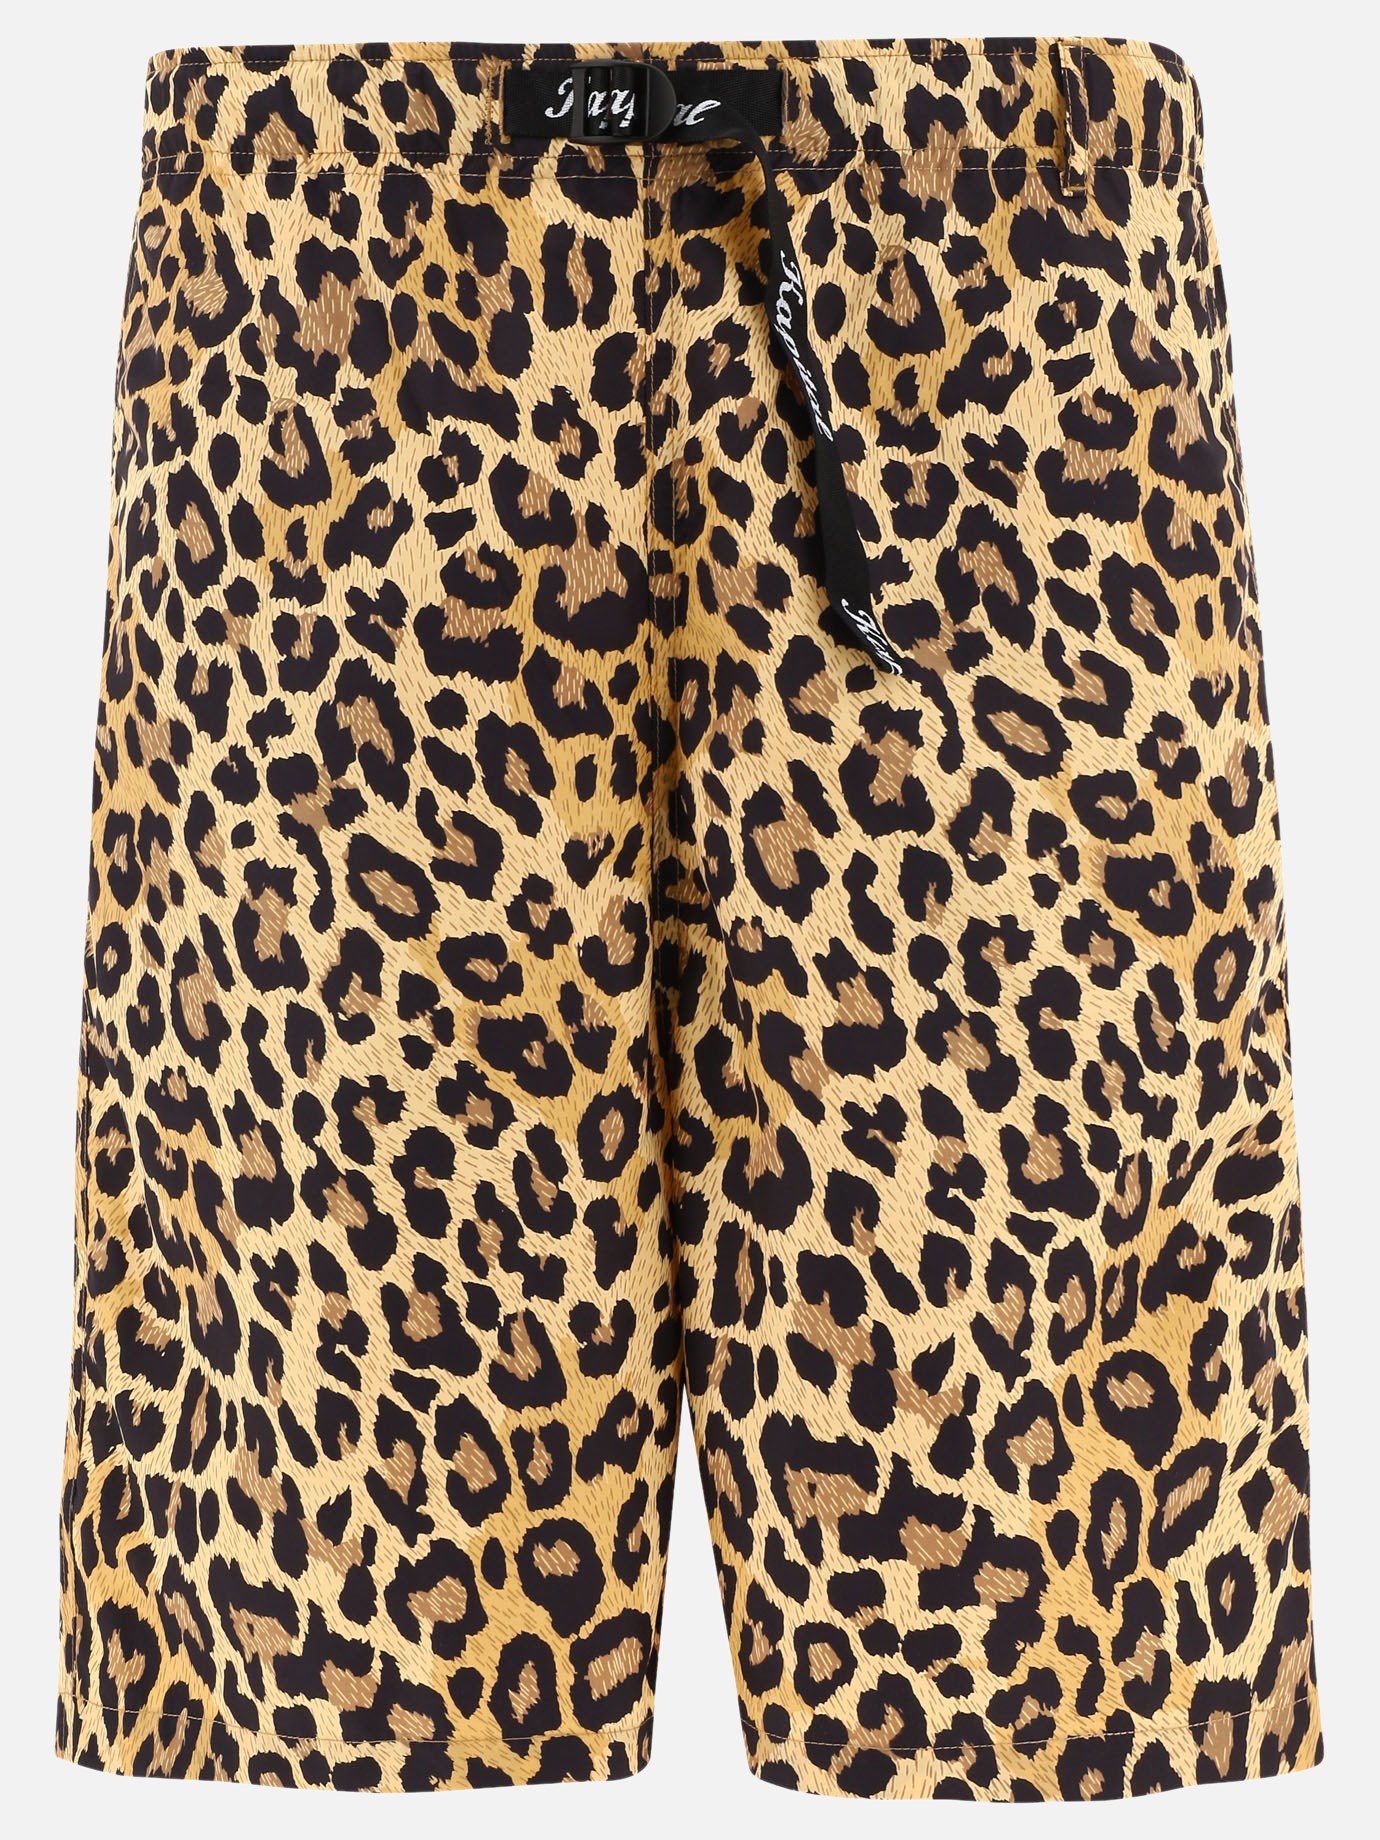 Leopard print bermuda shorts